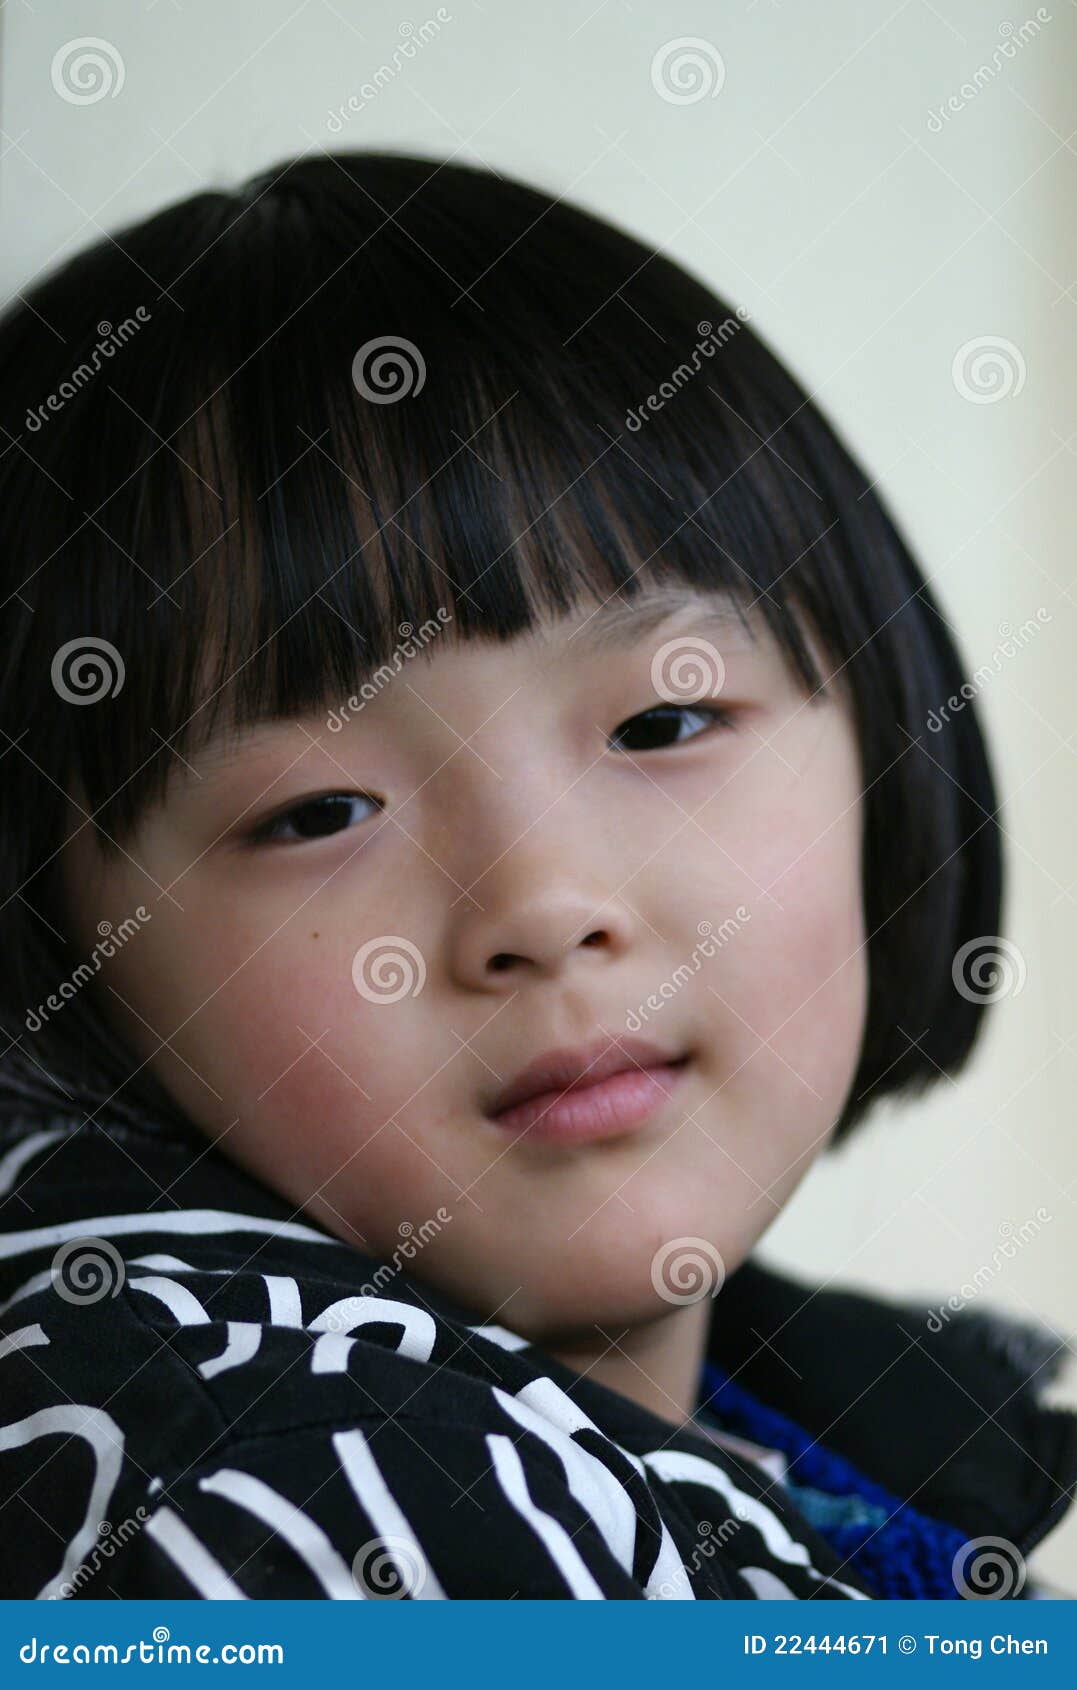 Chinese little girl stock image. Image of korean, indoor - 22444671